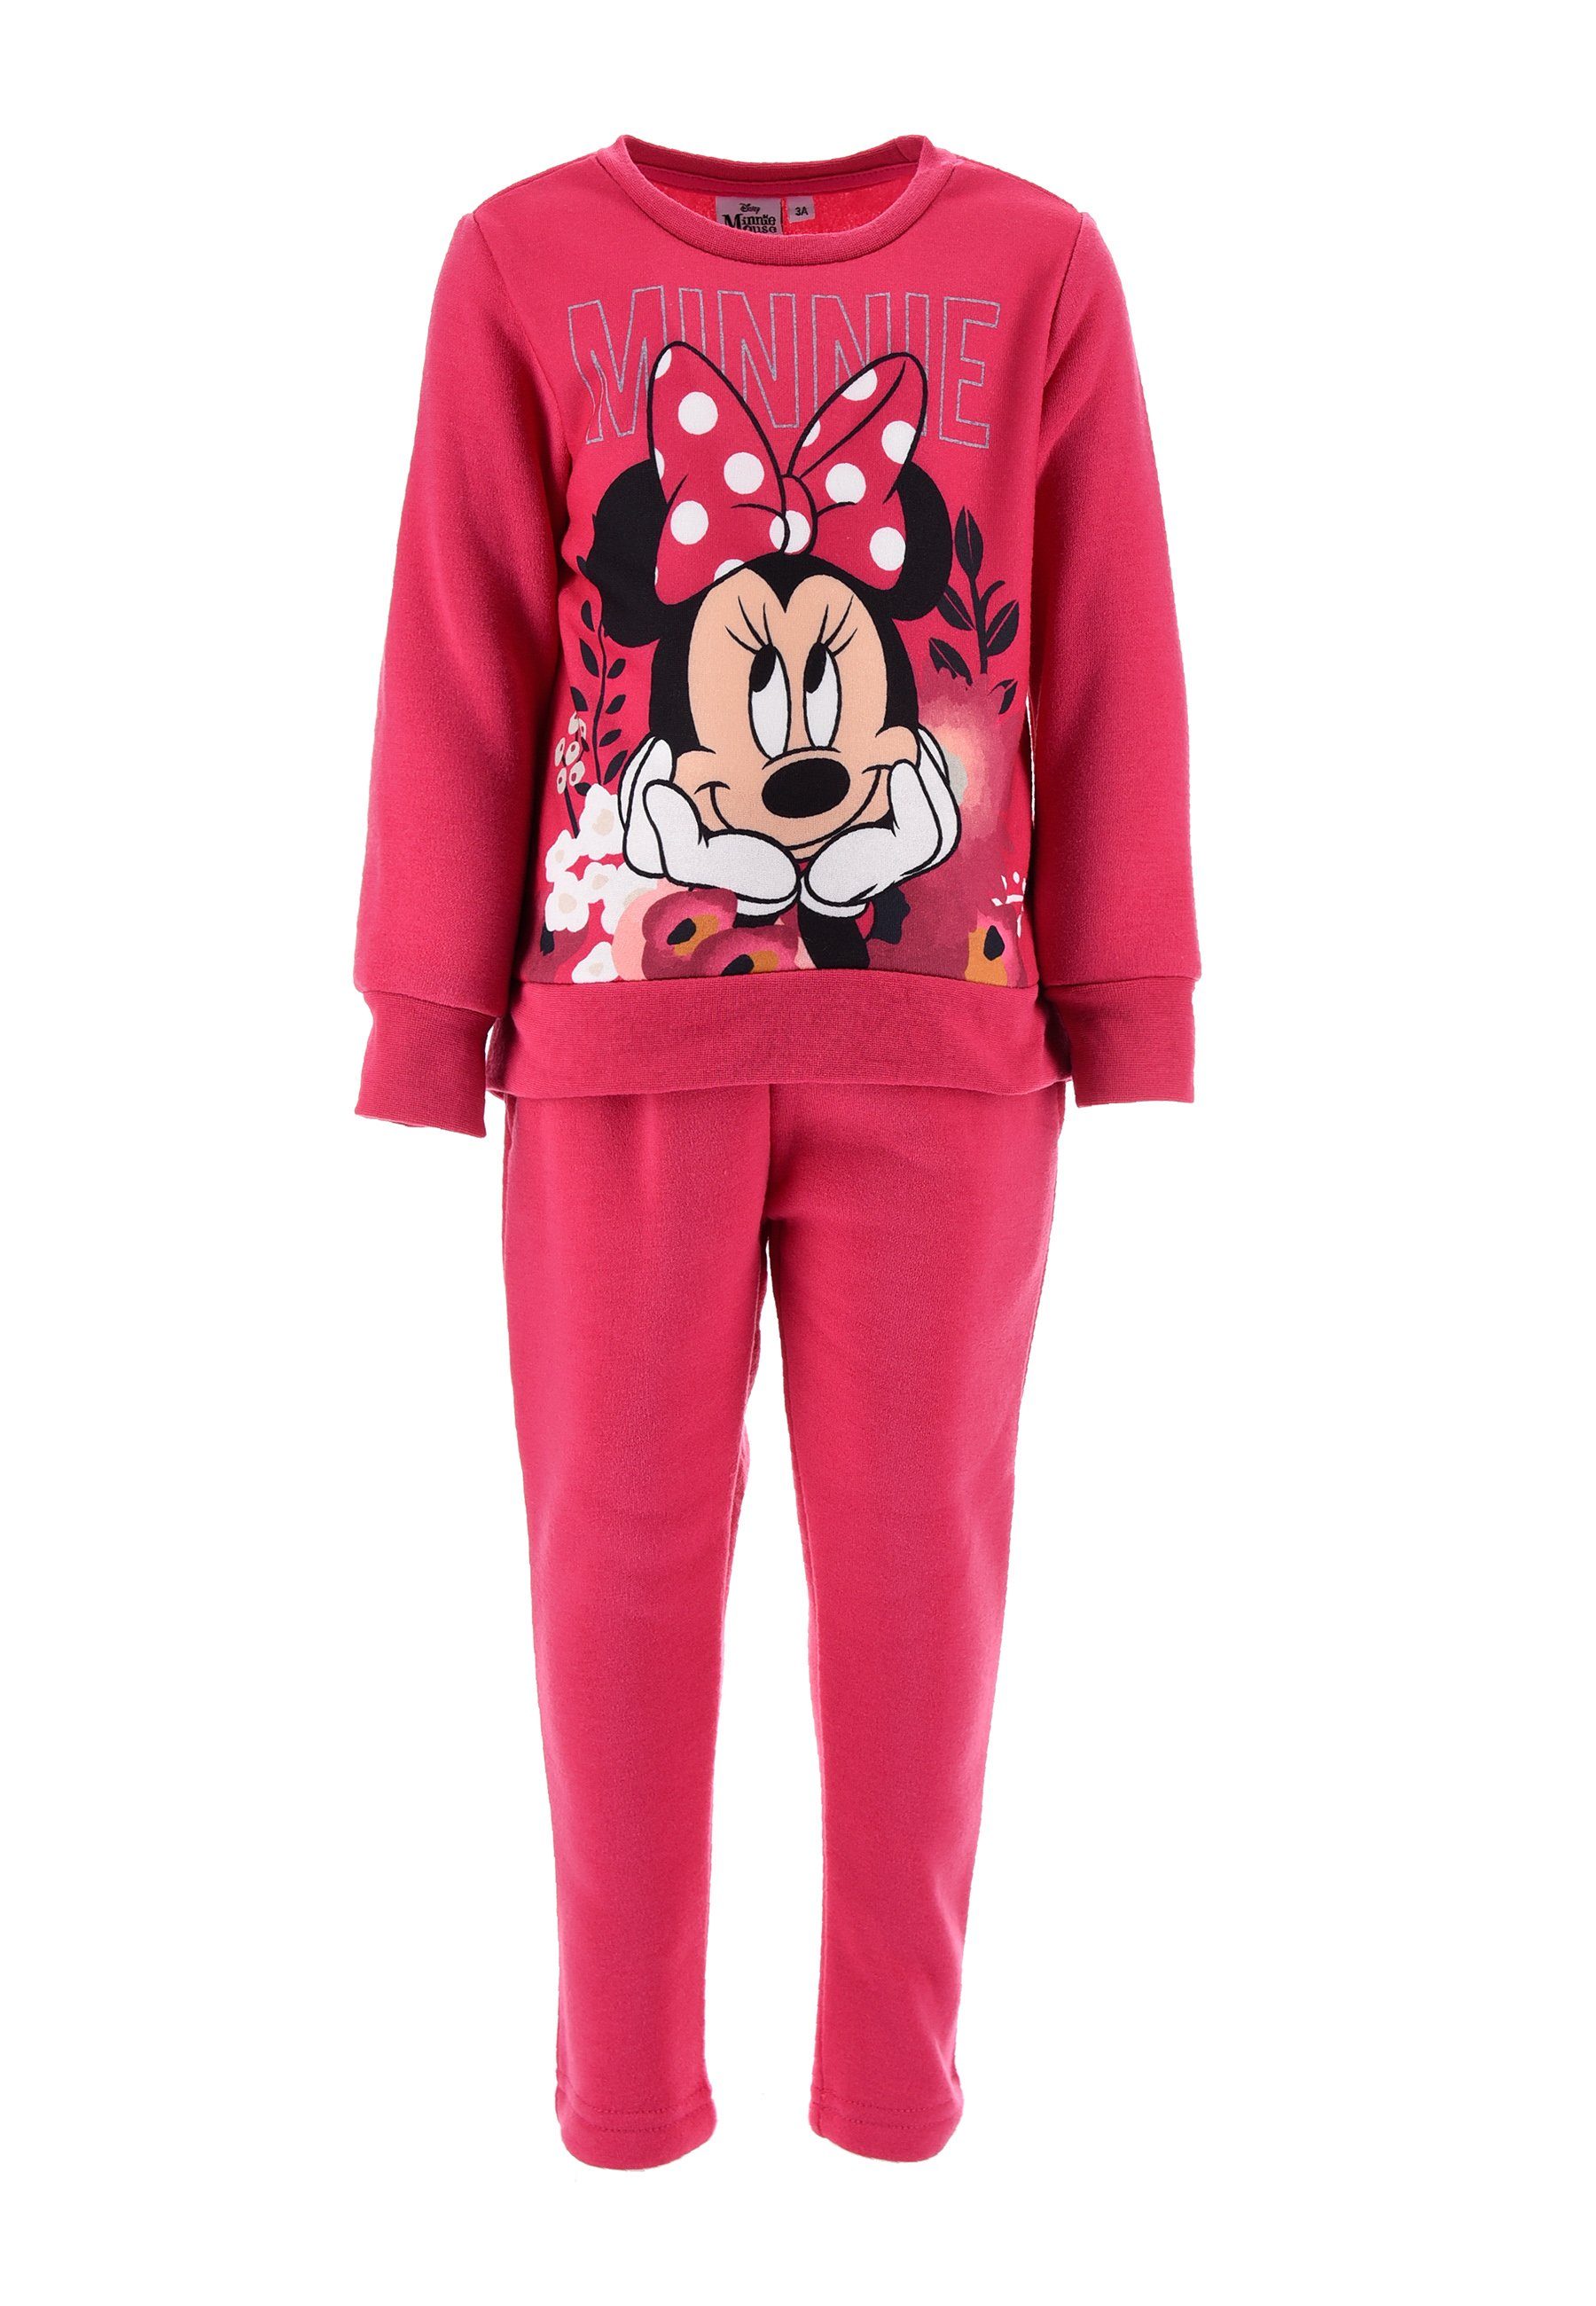 Sweatshirt und Hose Anzug Minnie Mouse Glitzer 116 Disney 2tlg Neu 